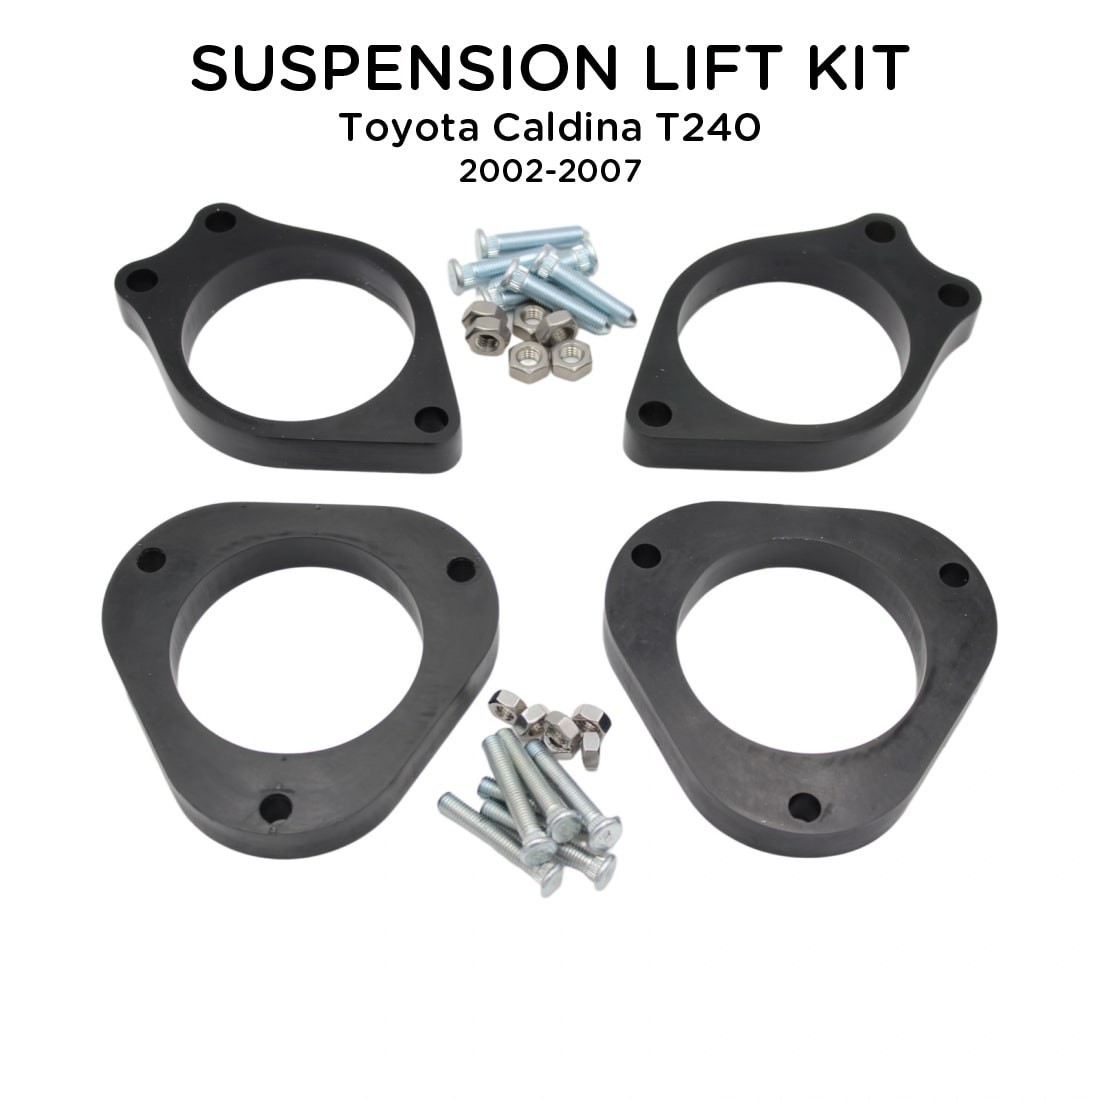 Suspension Lift Kit For Toyota Caldina T240 2002-2007